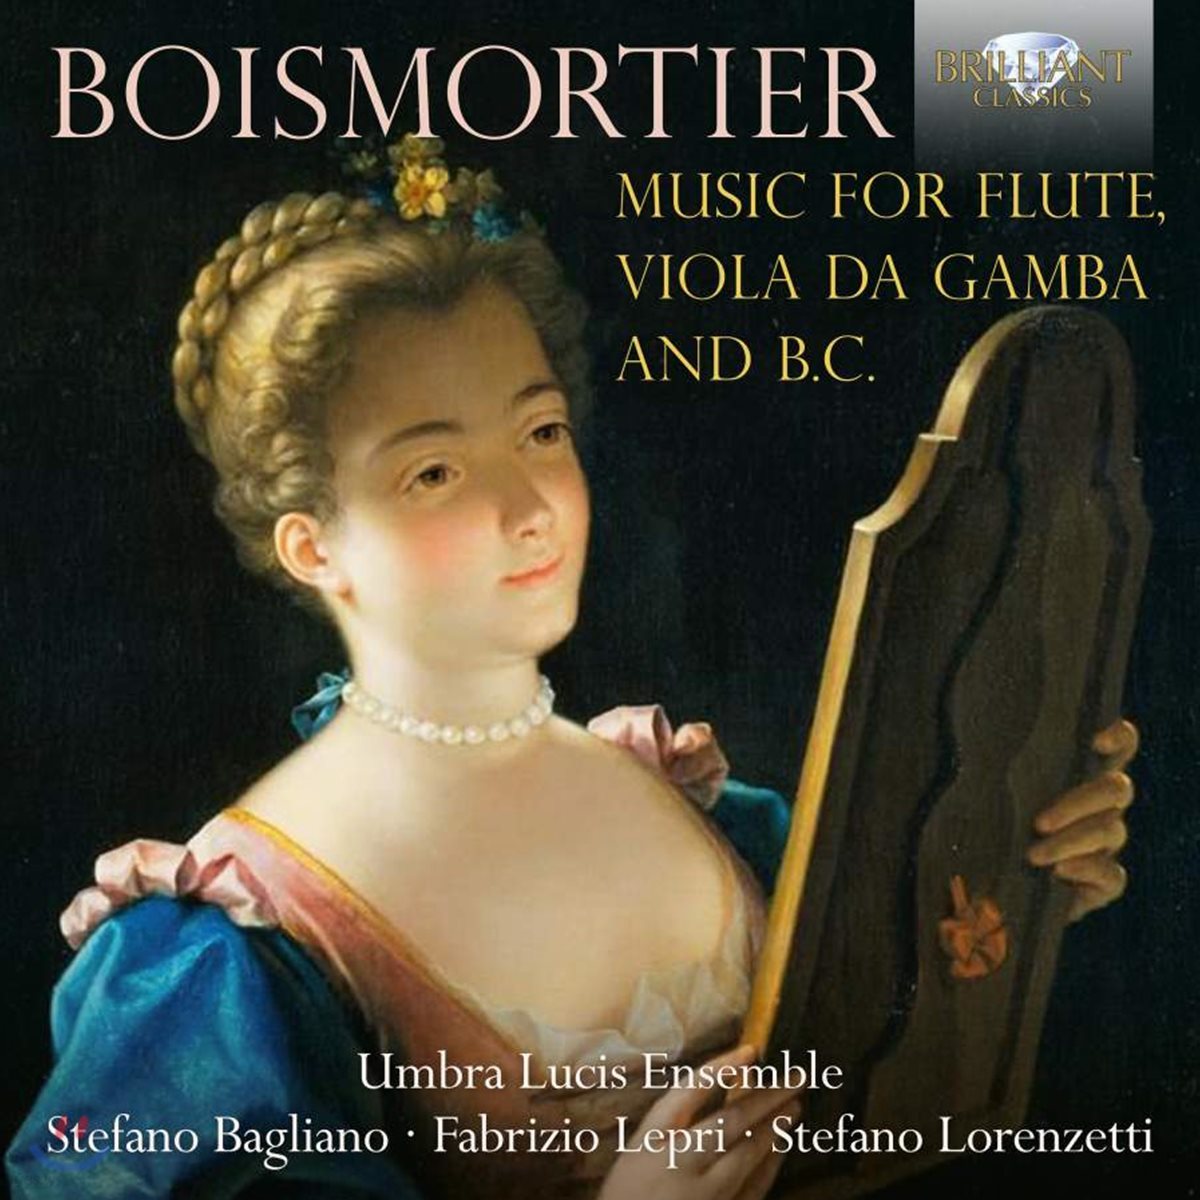 Umbra Lucis Ensemble 조제프 보댕 드 브와모르티에: 비올라 다 감바, B.C, 플루트을 위한 음악 (Boismortier: Music for Flute, Viola da Gamba and B.C)